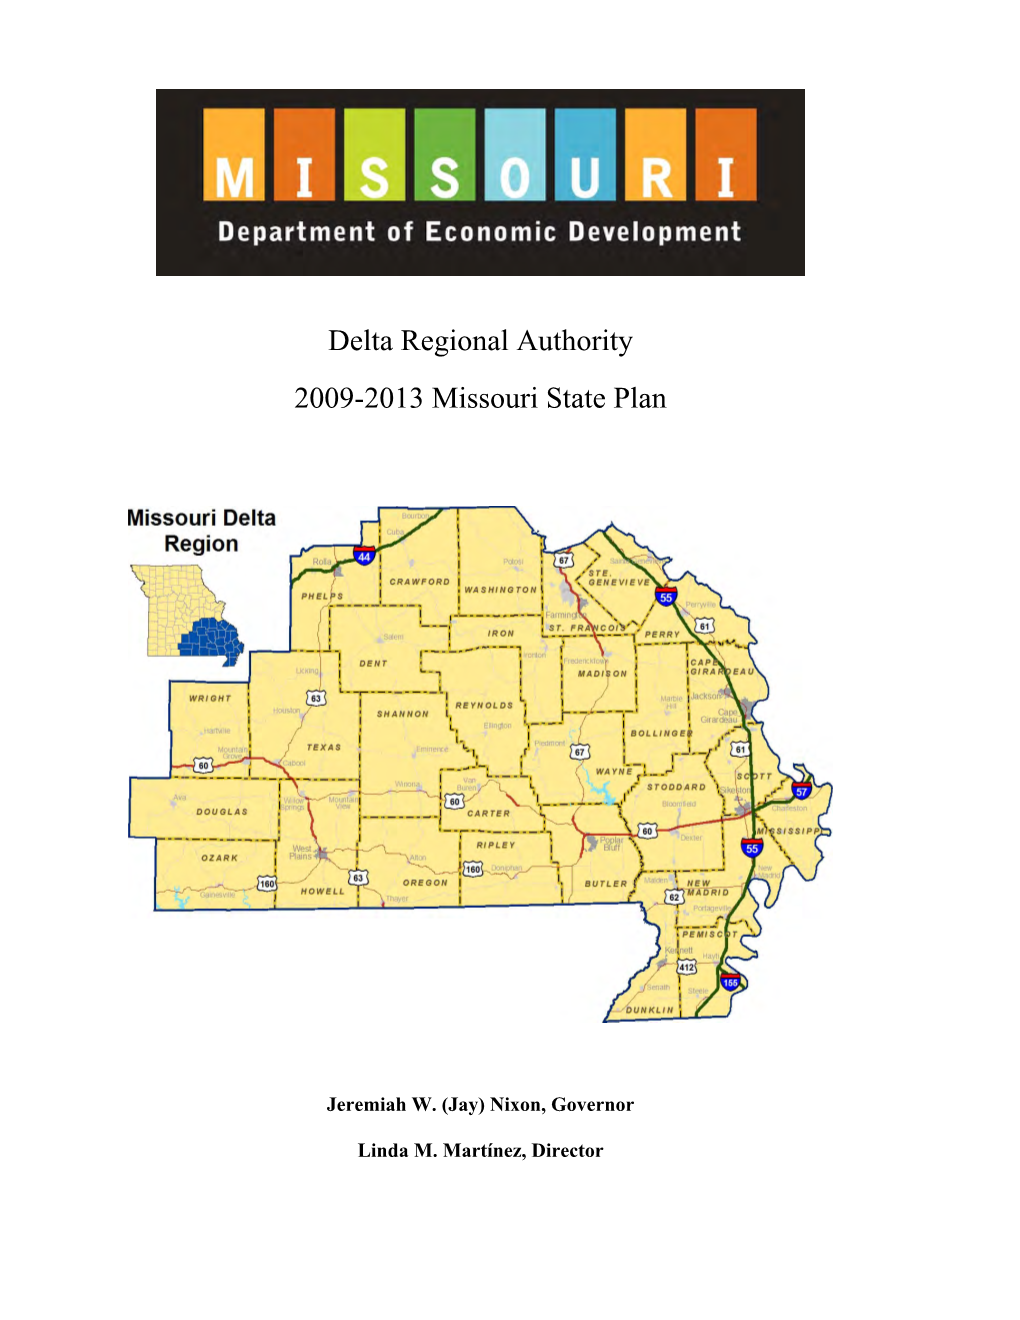 Delta Regional Authority 2009-2013 Missouri State Plan